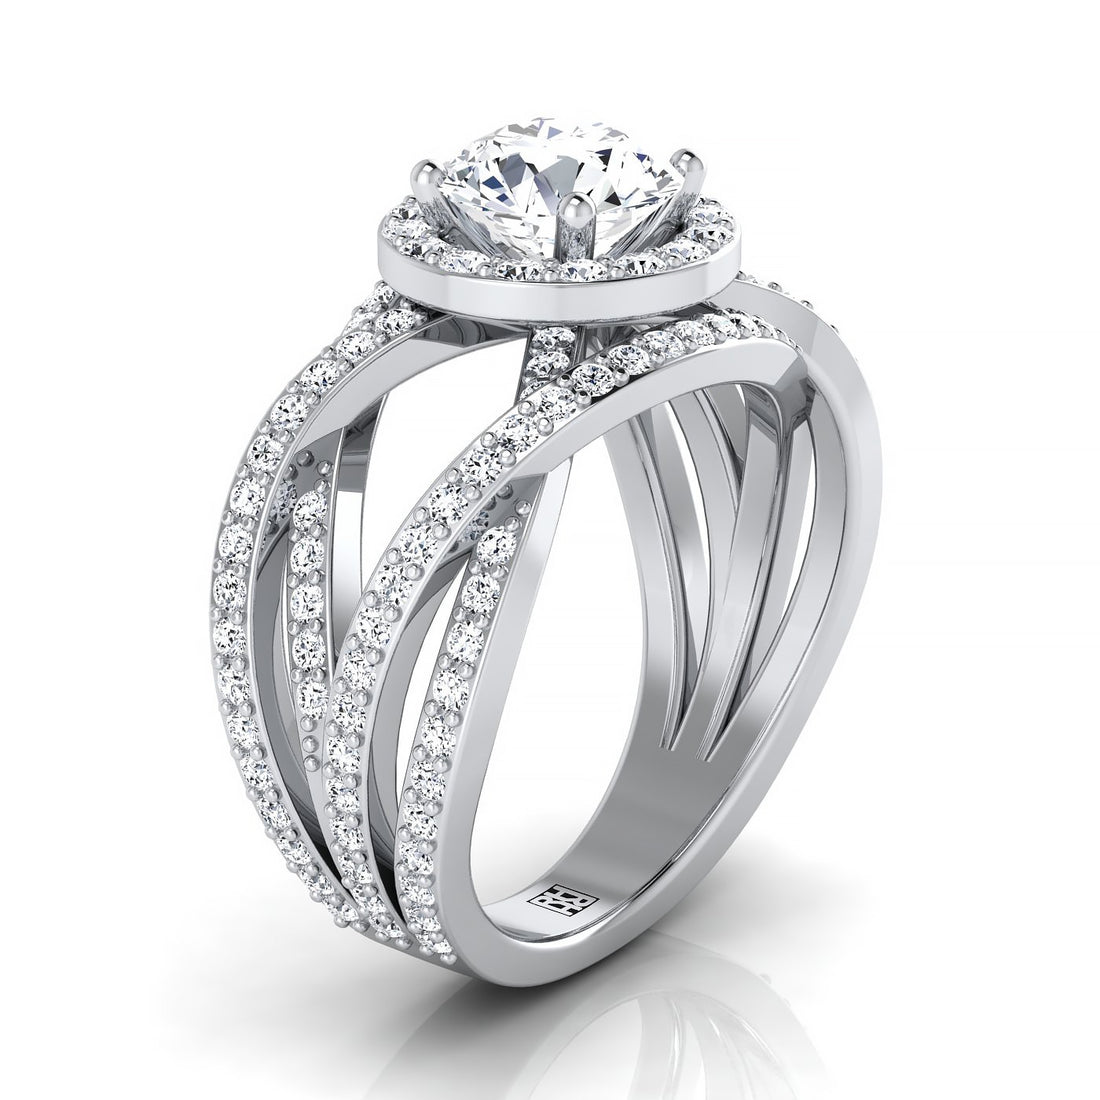 Why Buy Platinum Diamond Engagement Rings?